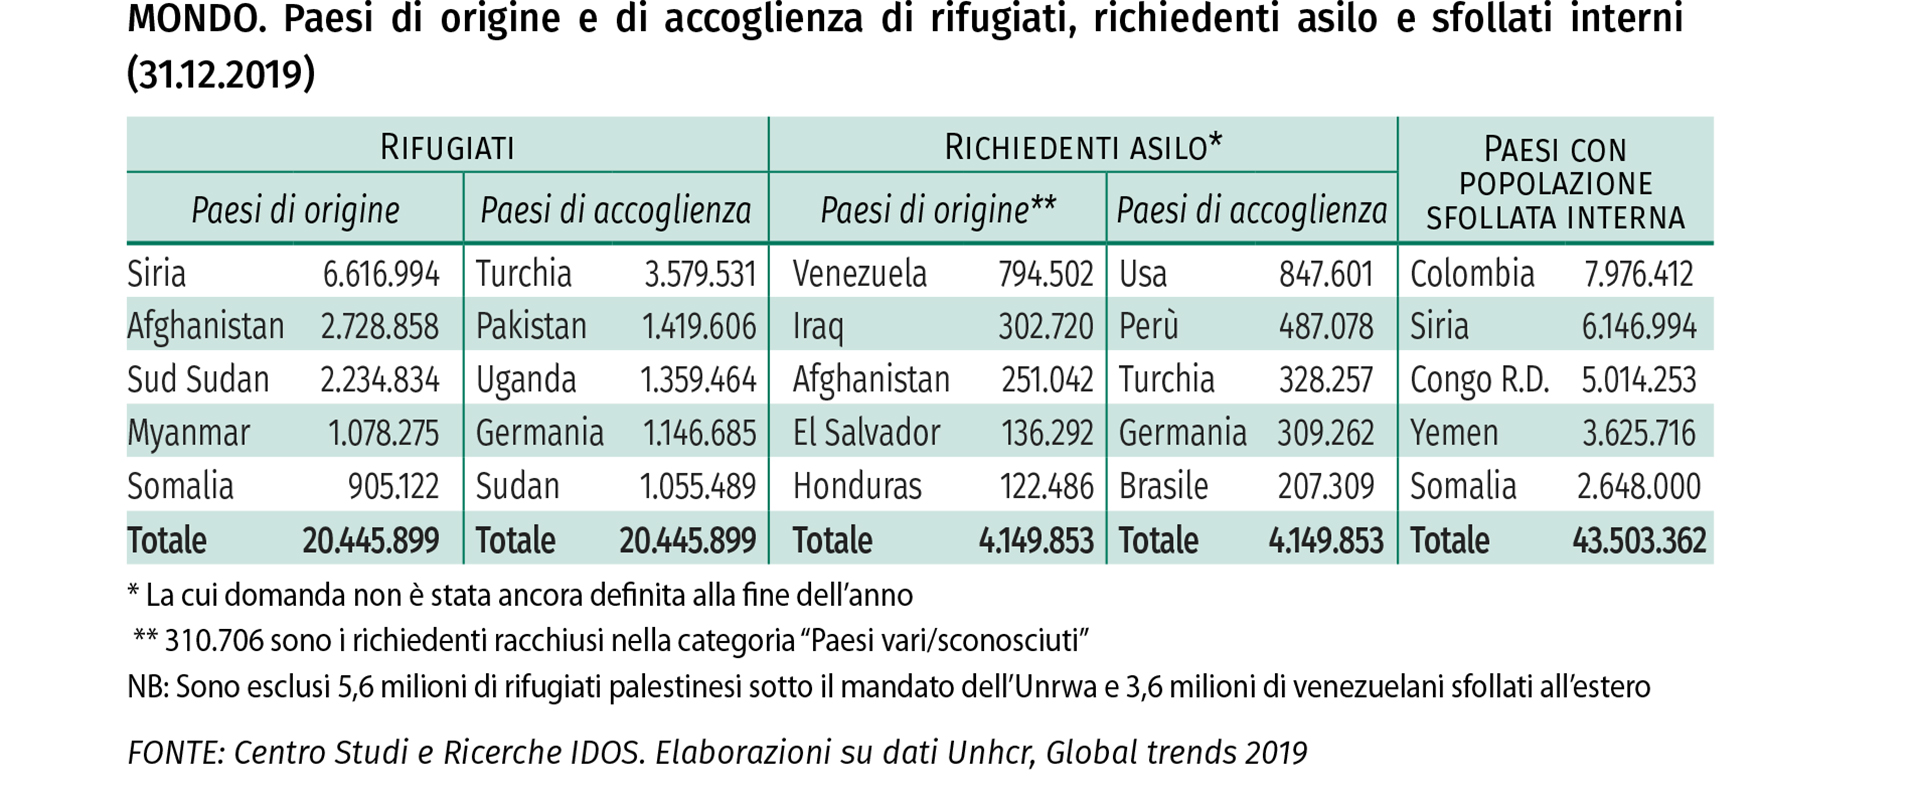 Paesi di origine e di accoglienza di rifugiati, richiedenti asilo e sfollati interni (31/12/2019)